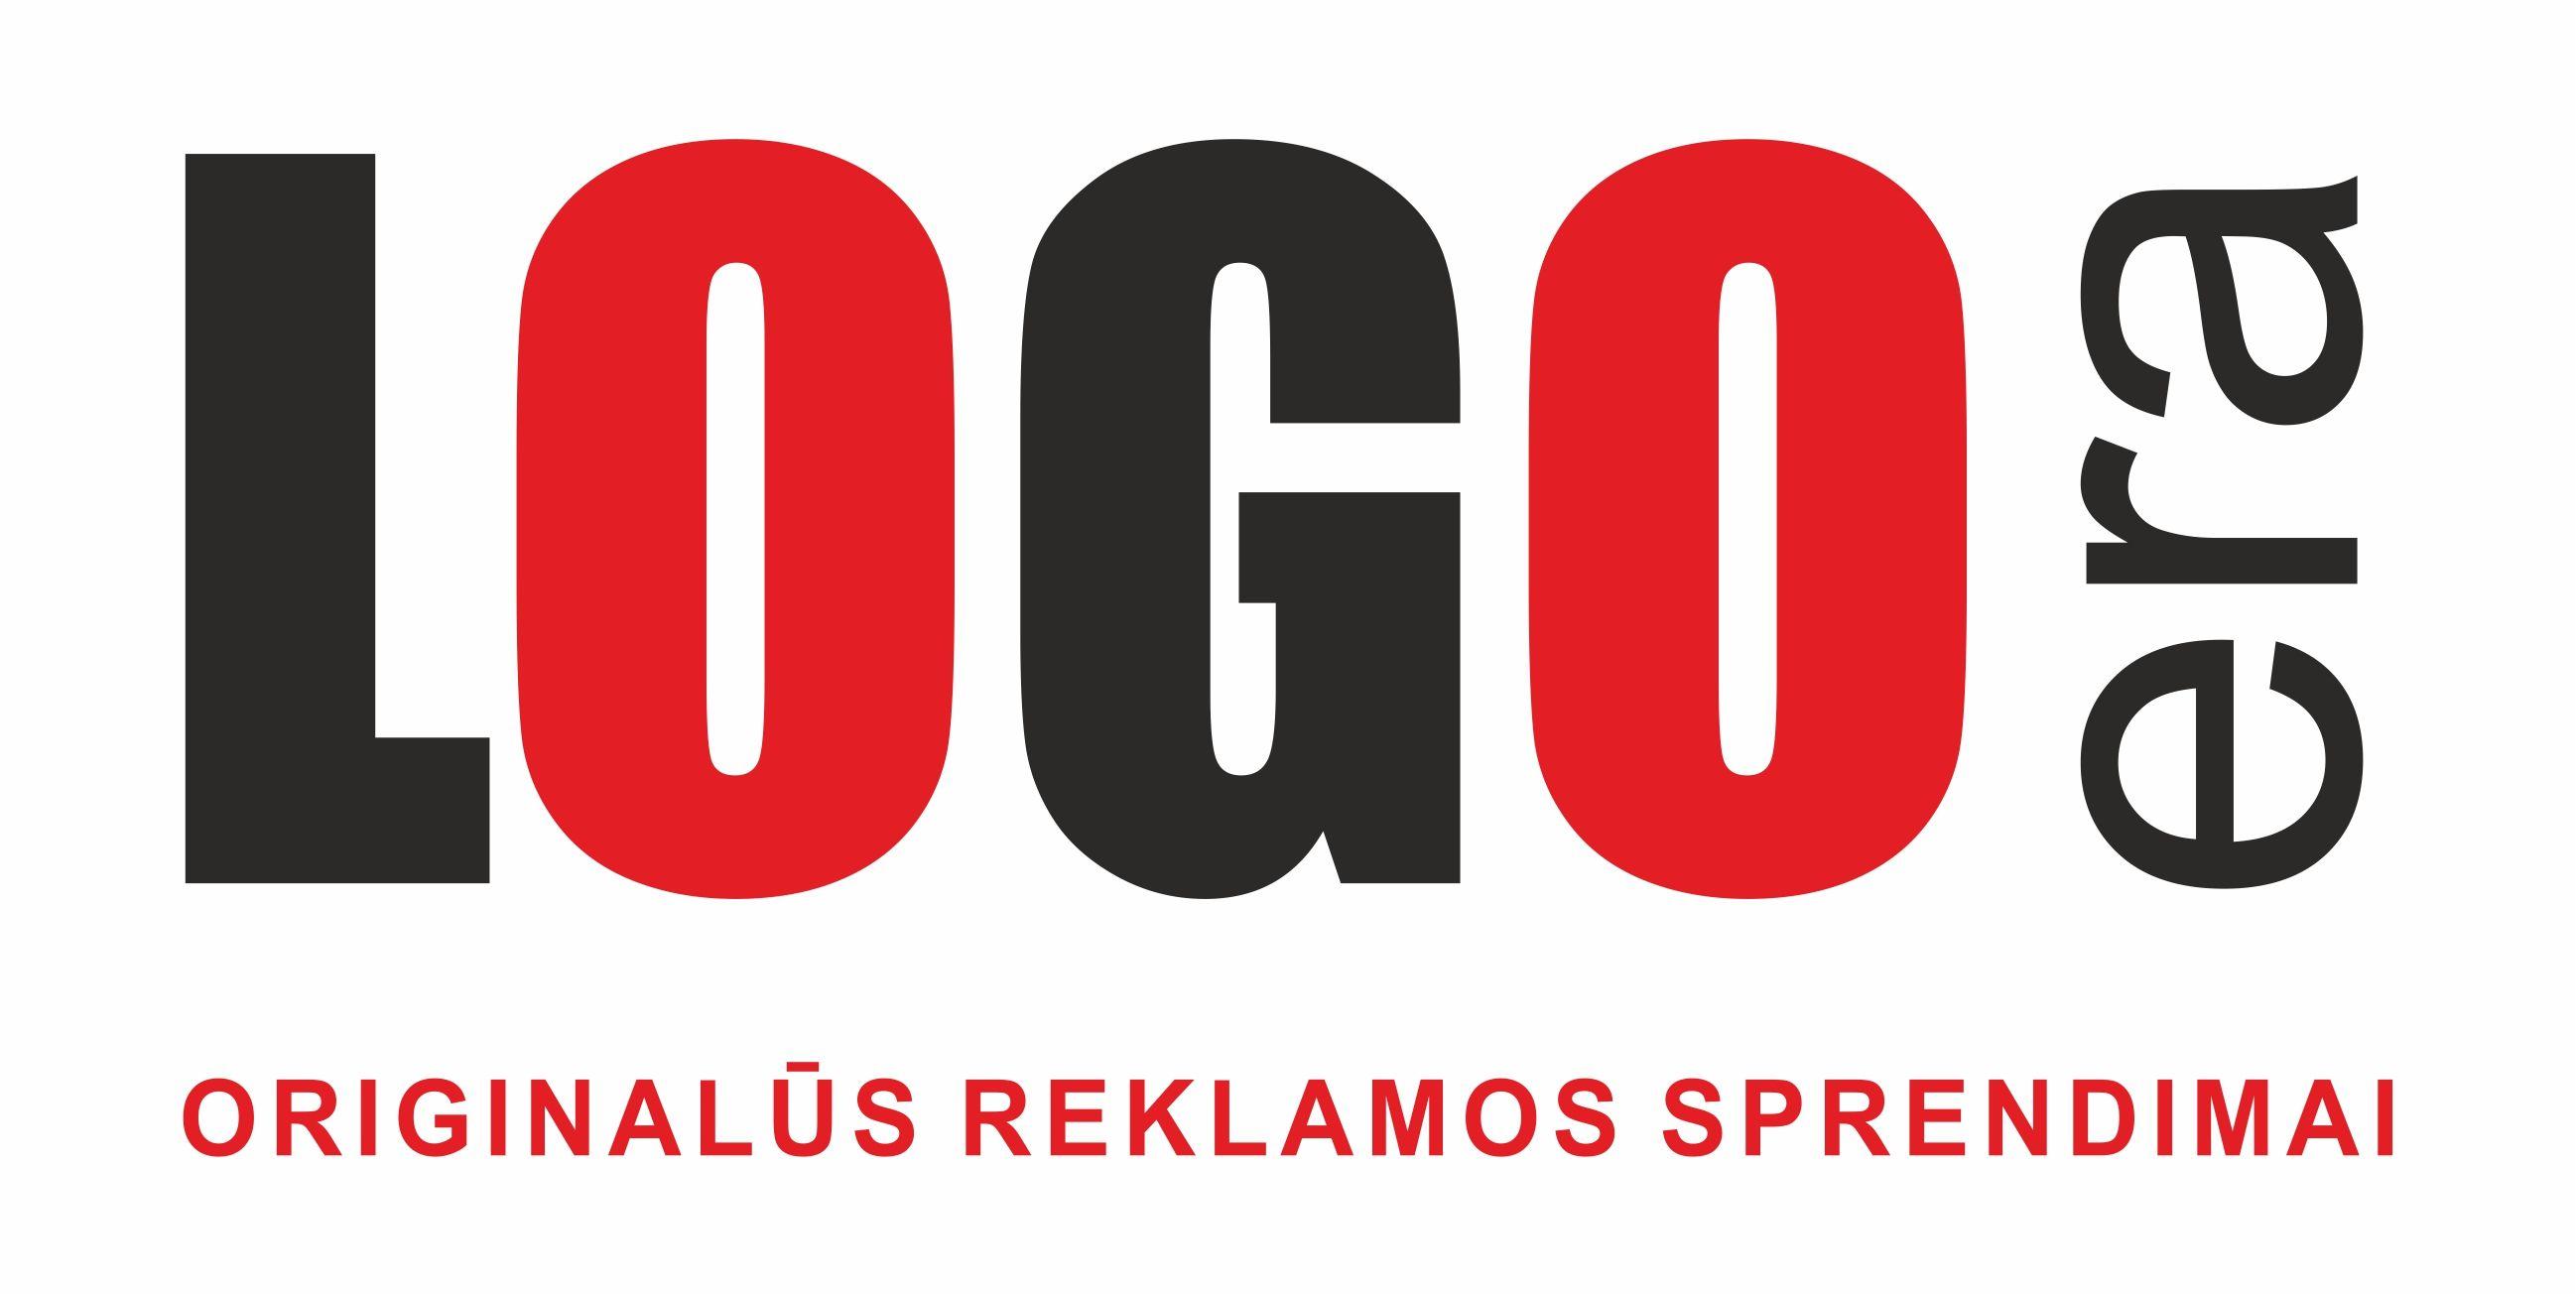 Profile with Red Oval Logo - Enterprise Lithuania LOGOERA Ltd. profile